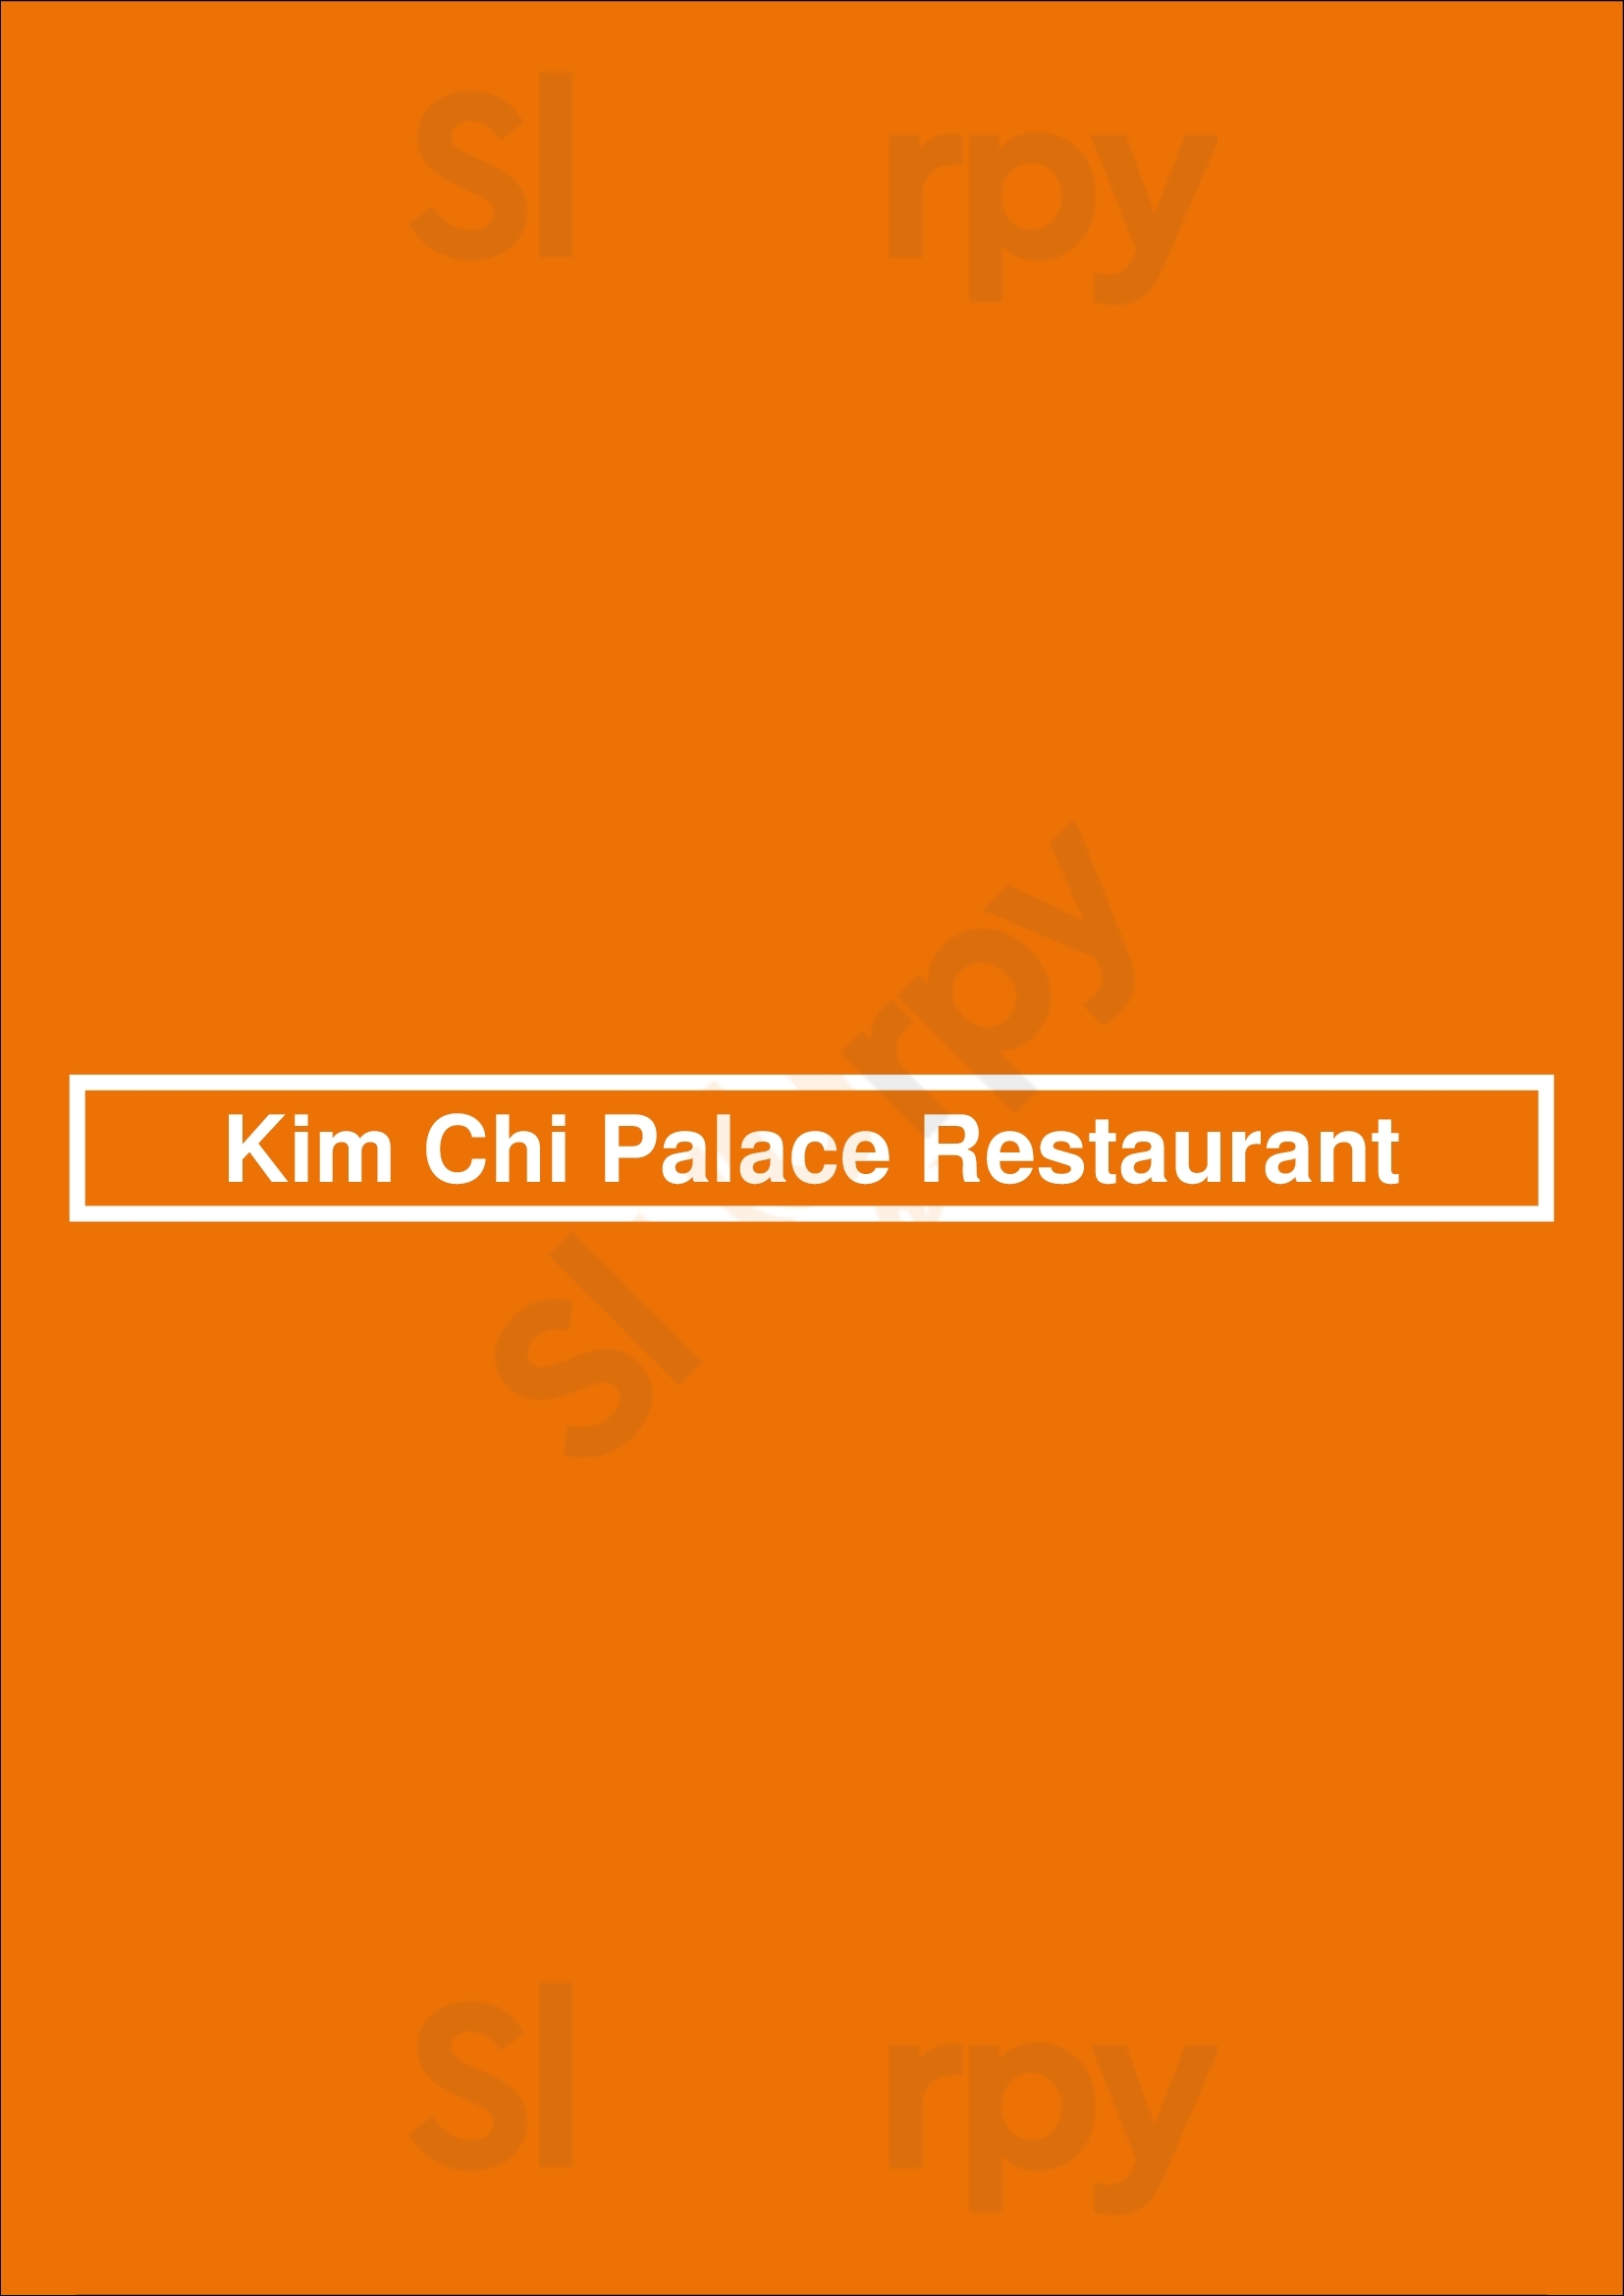 Kim Chi Palace Restaurant Surrey Menu - 1